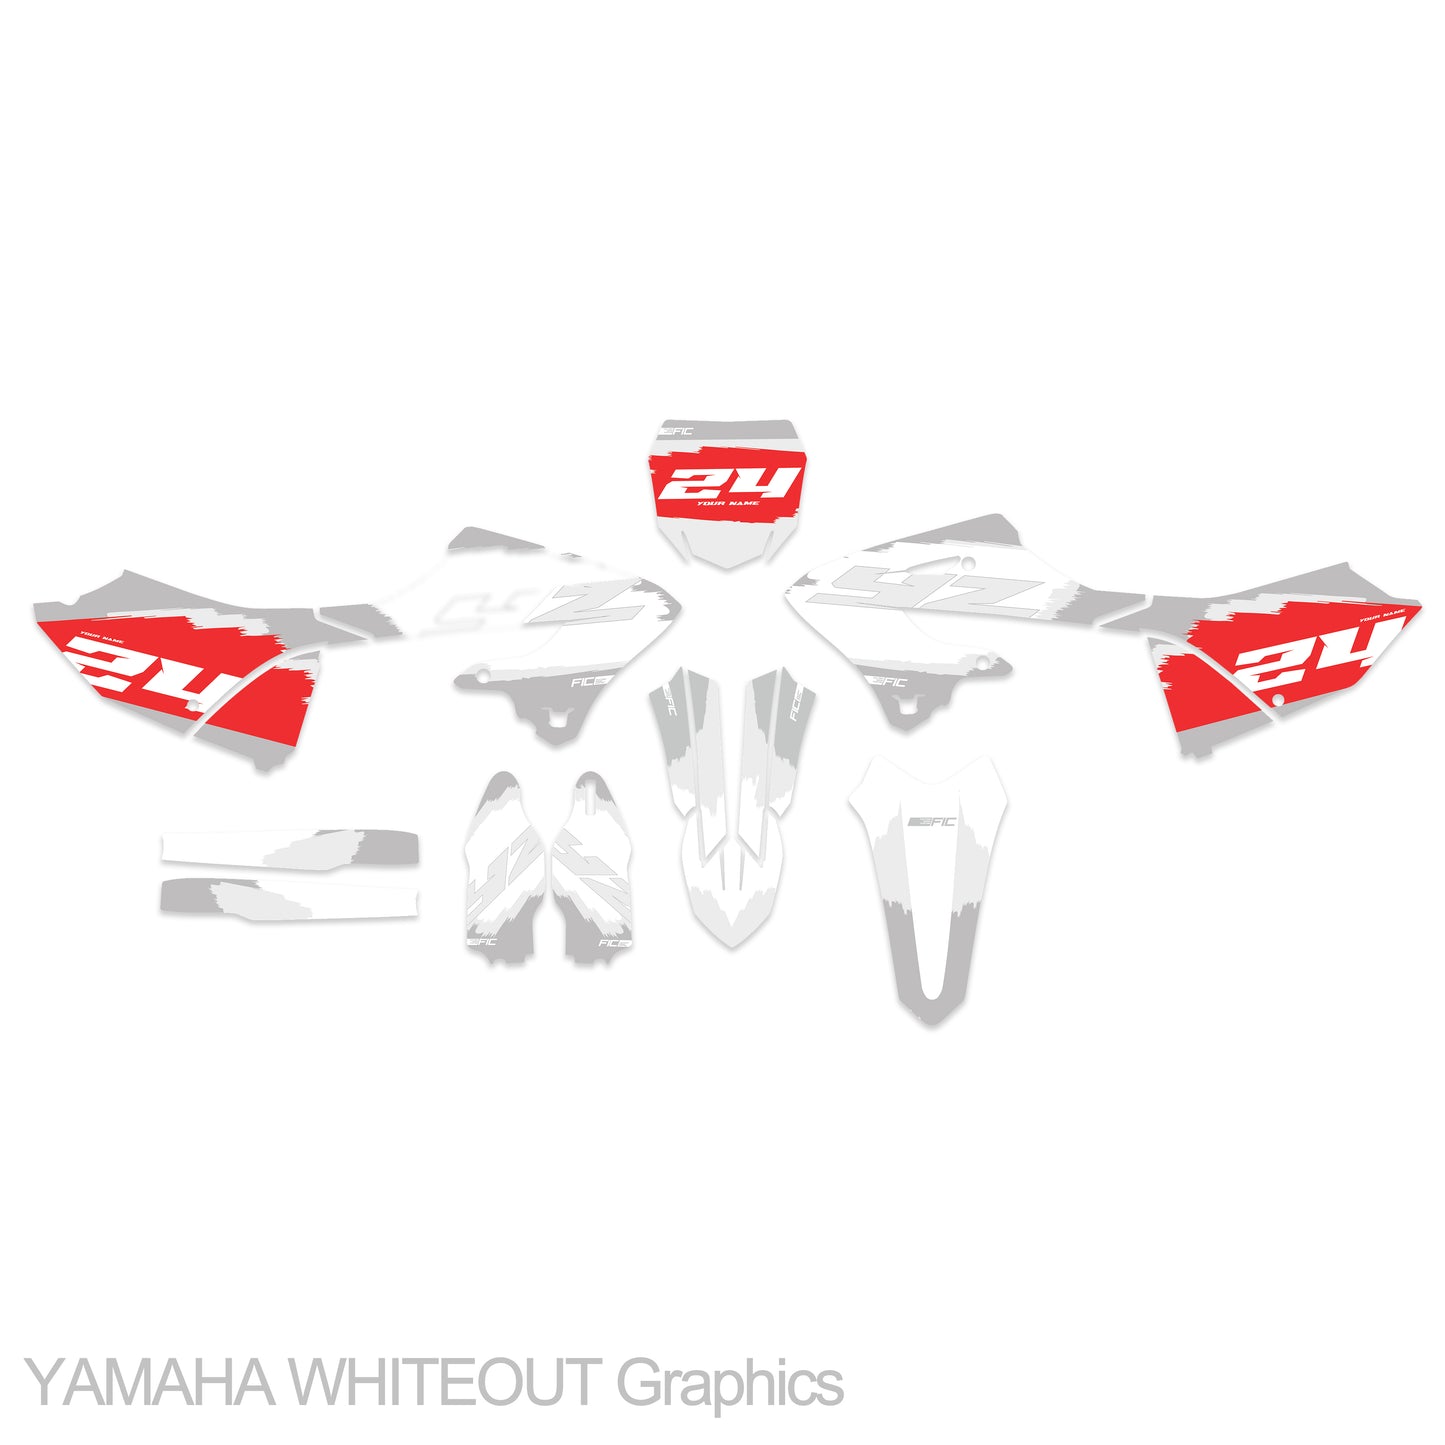 YAMAHA YZ 450F 2006 - 2007 WHITEOUT Graphics kit